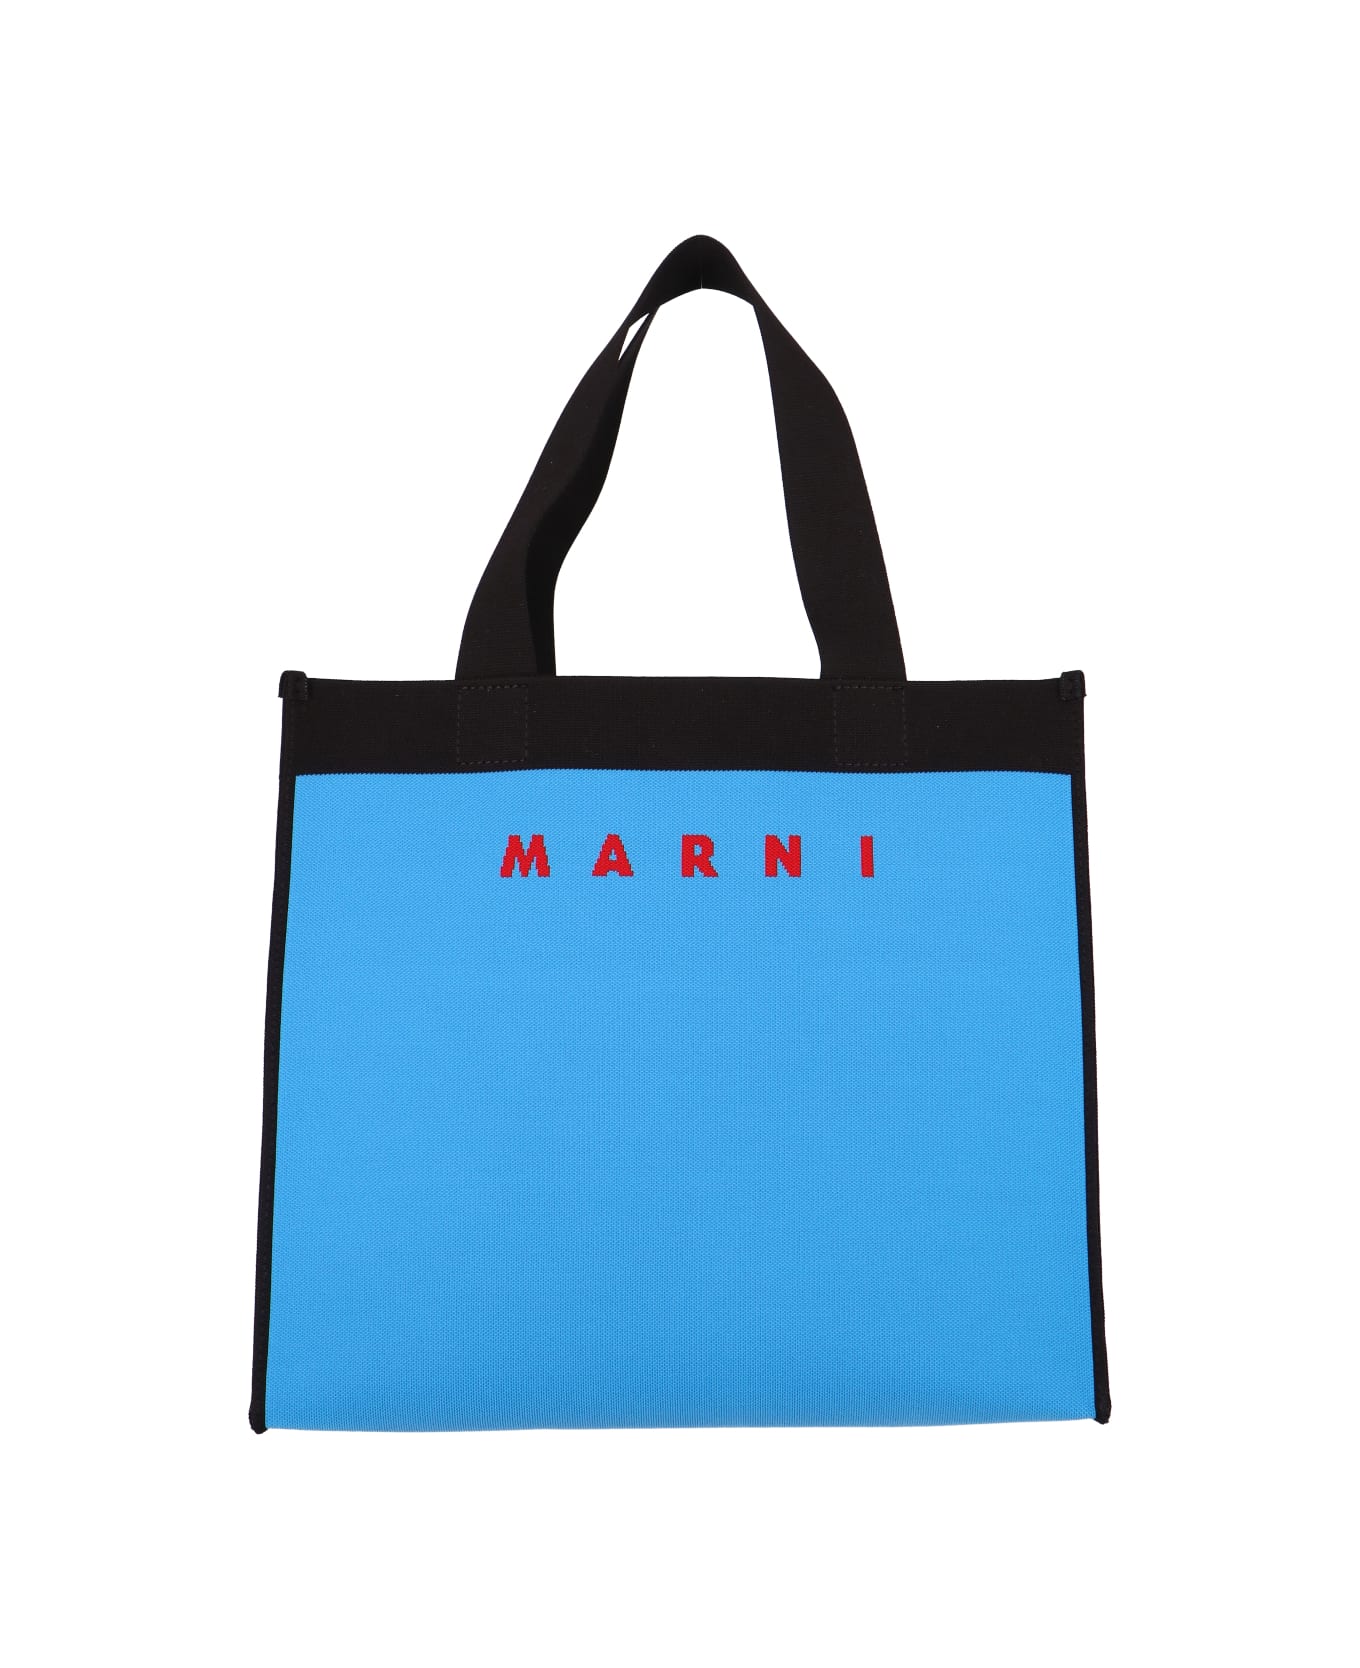 Marni Logo Tote Bag - Blue